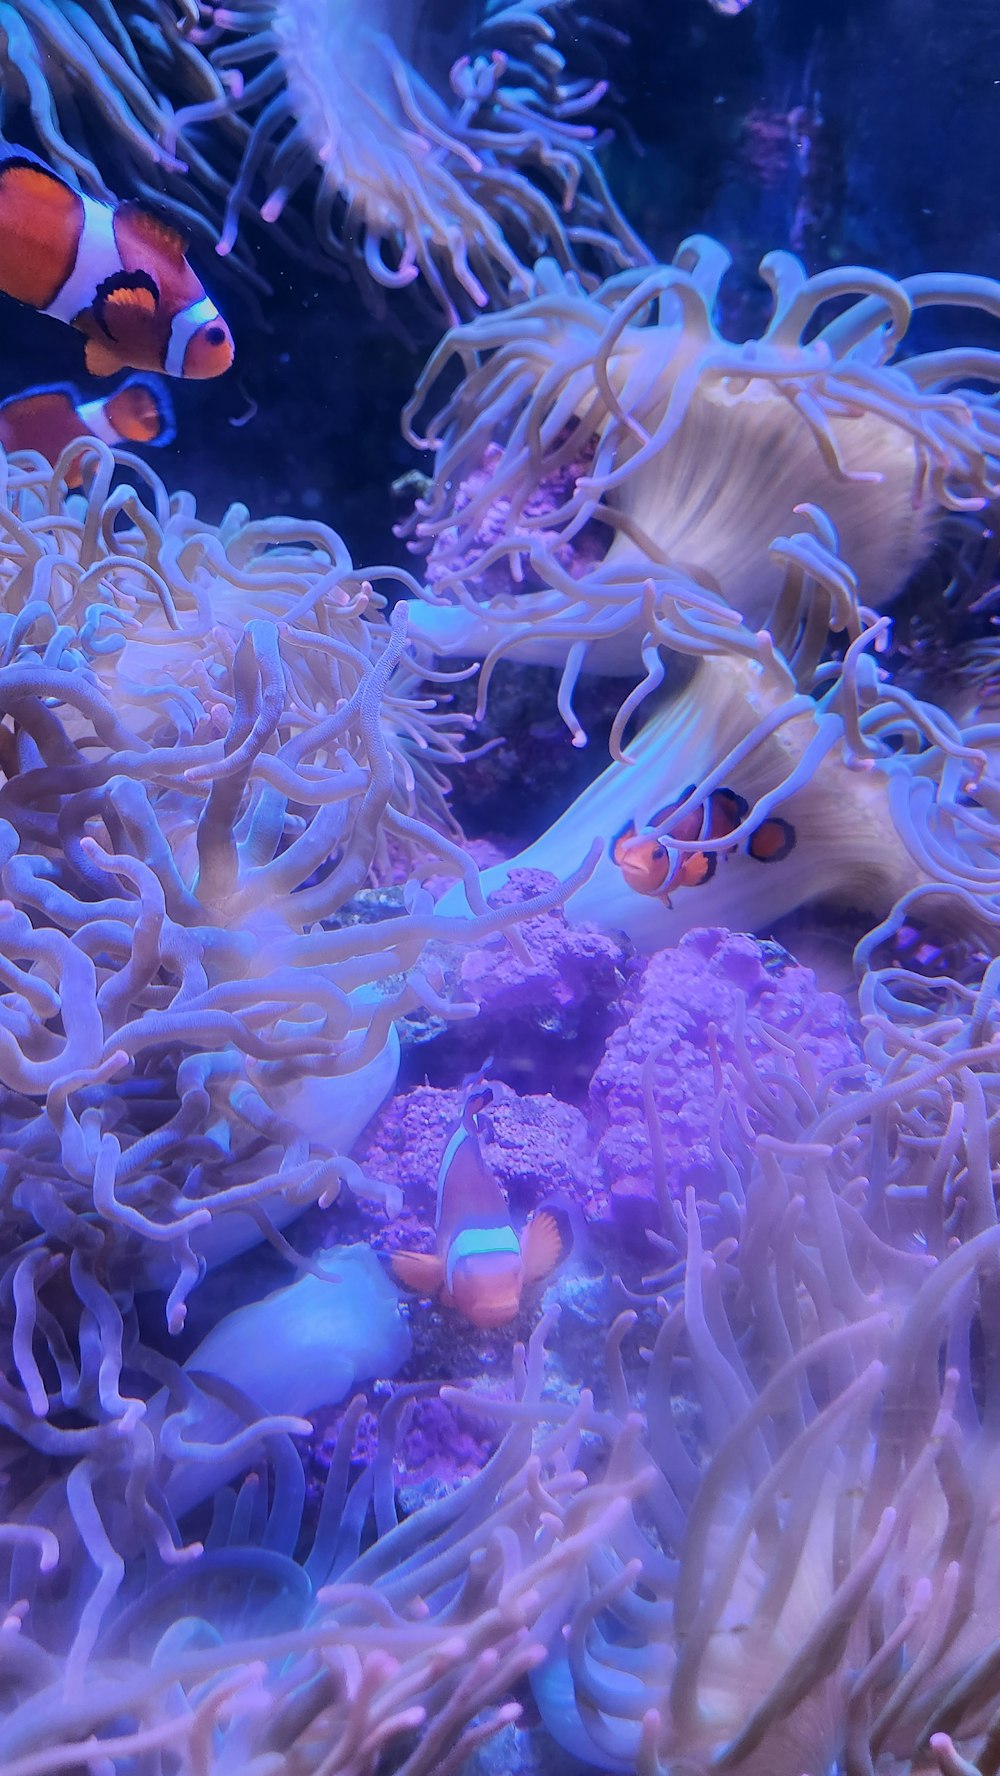 a group of clown fish swimming in an aquarium